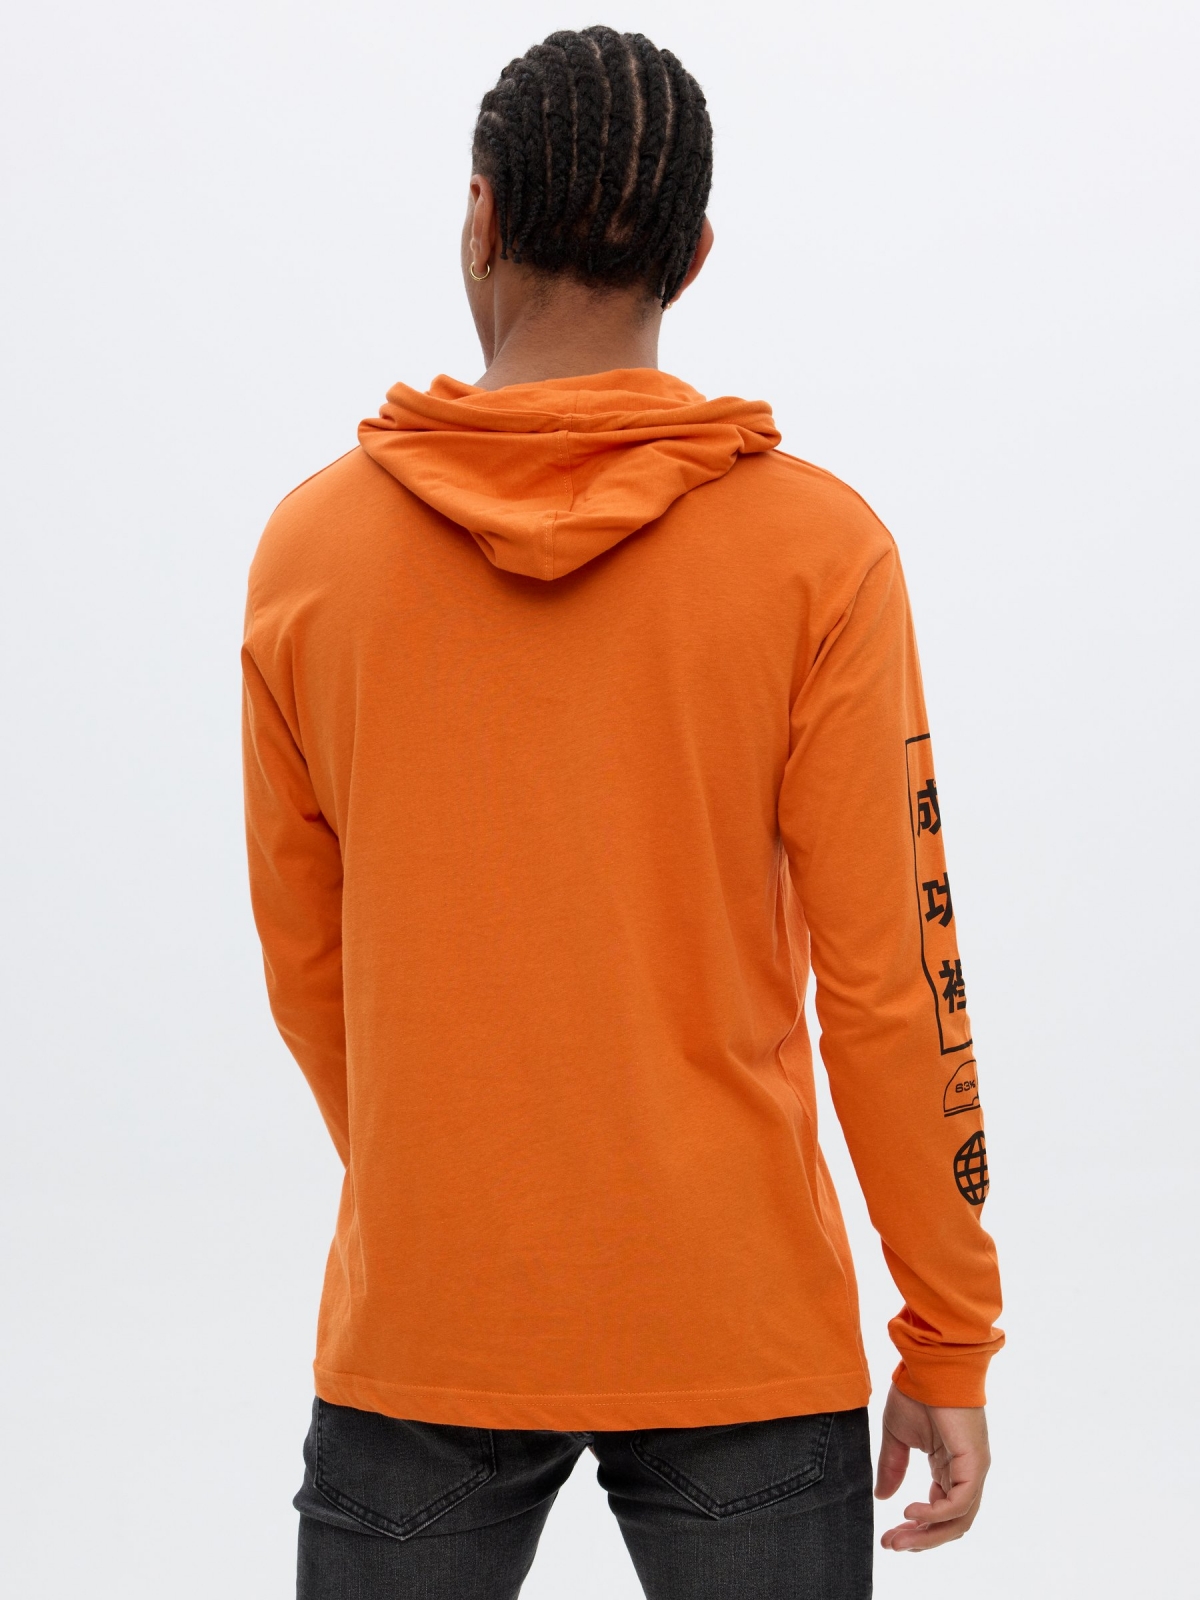 Camiseta capucha estampada naranja oscuro vista media trasera